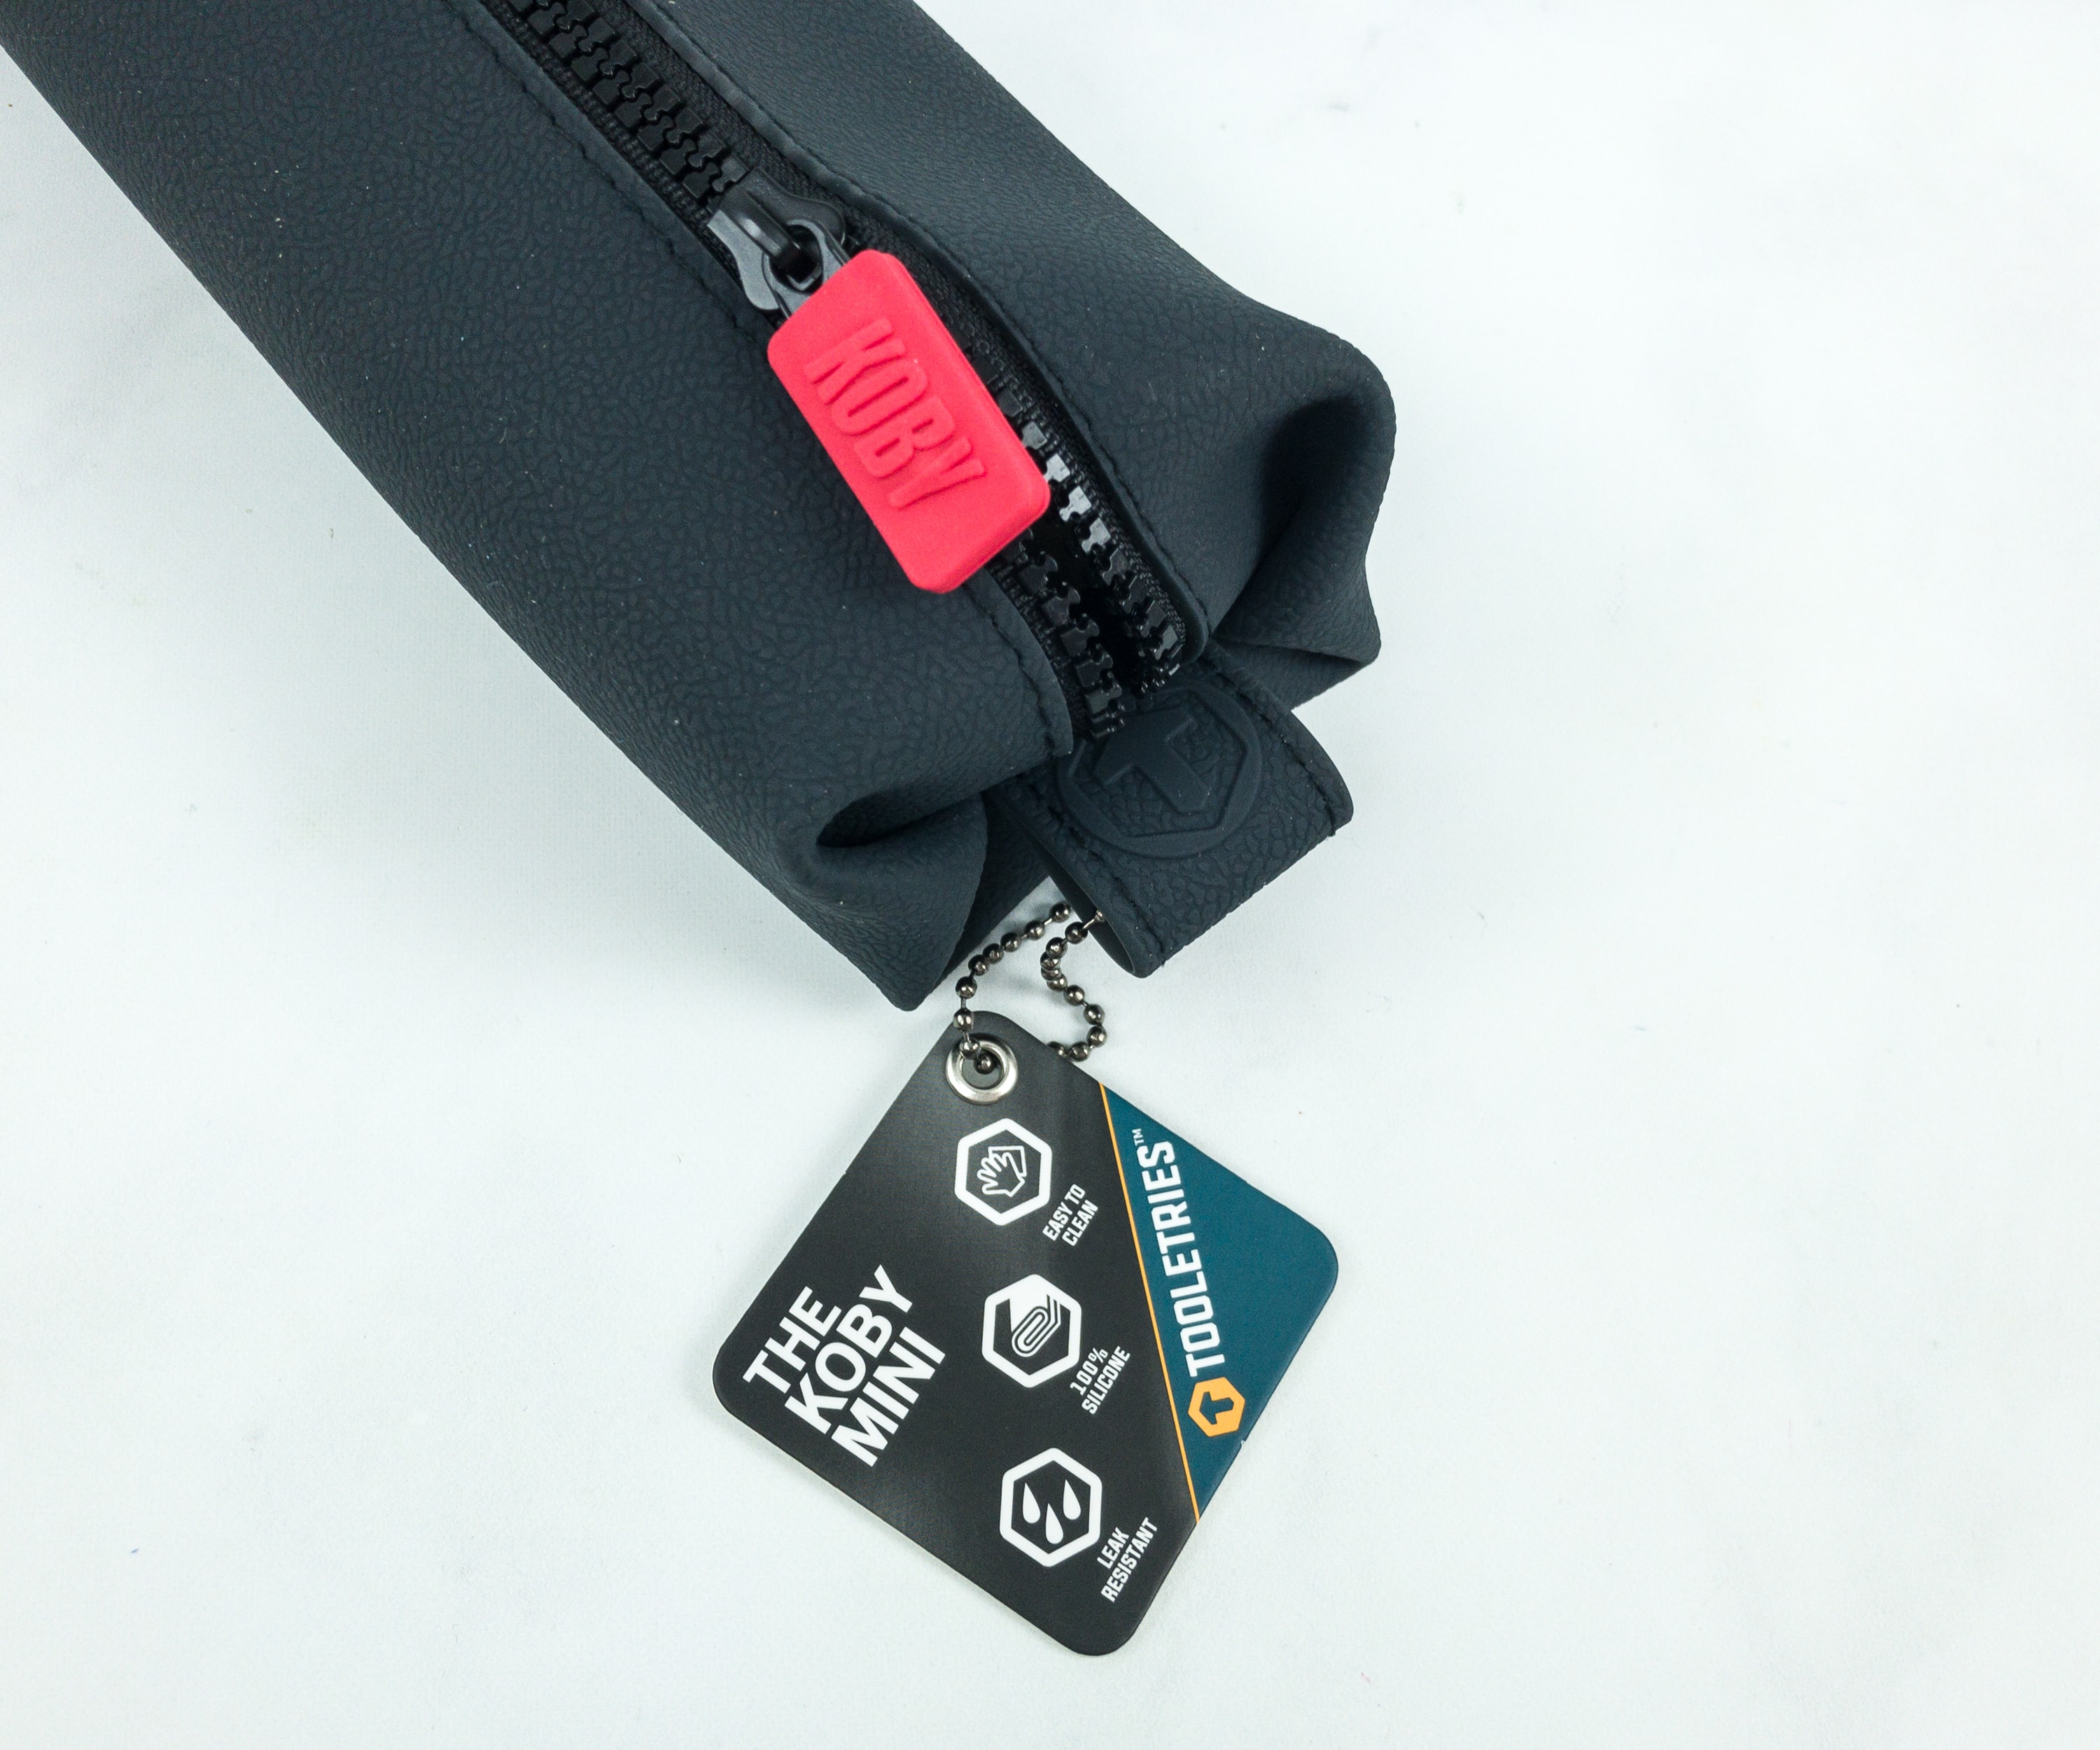 Koby Bag Mini 100% Silicone, Leak Resistant Toiletry Bag, Pencil